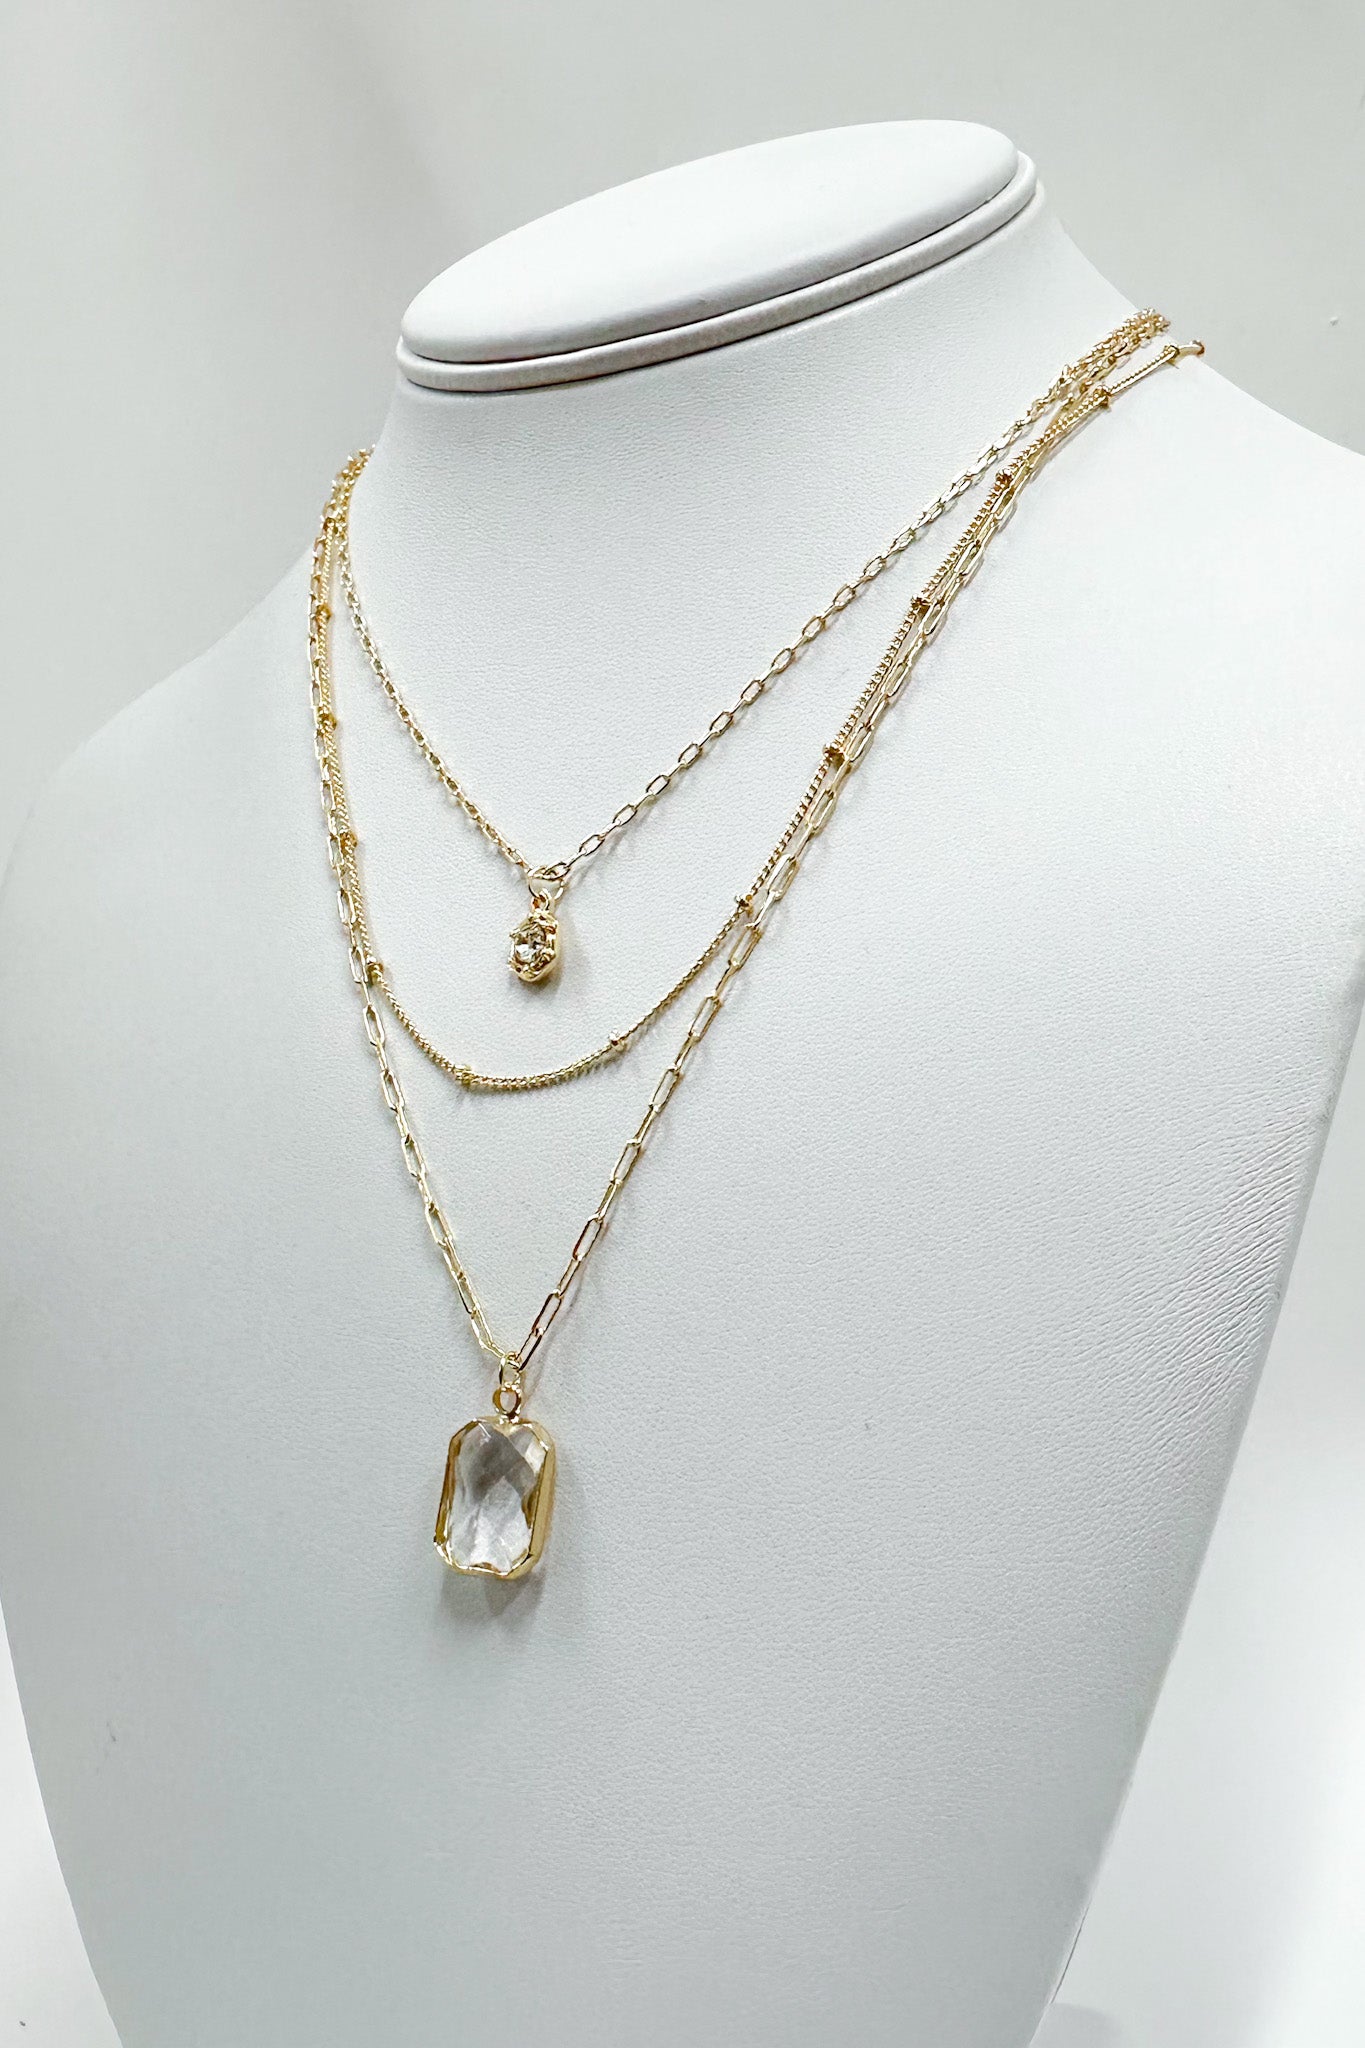  Glamorous Influence Crystal Layered Necklace - Madison and Mallory